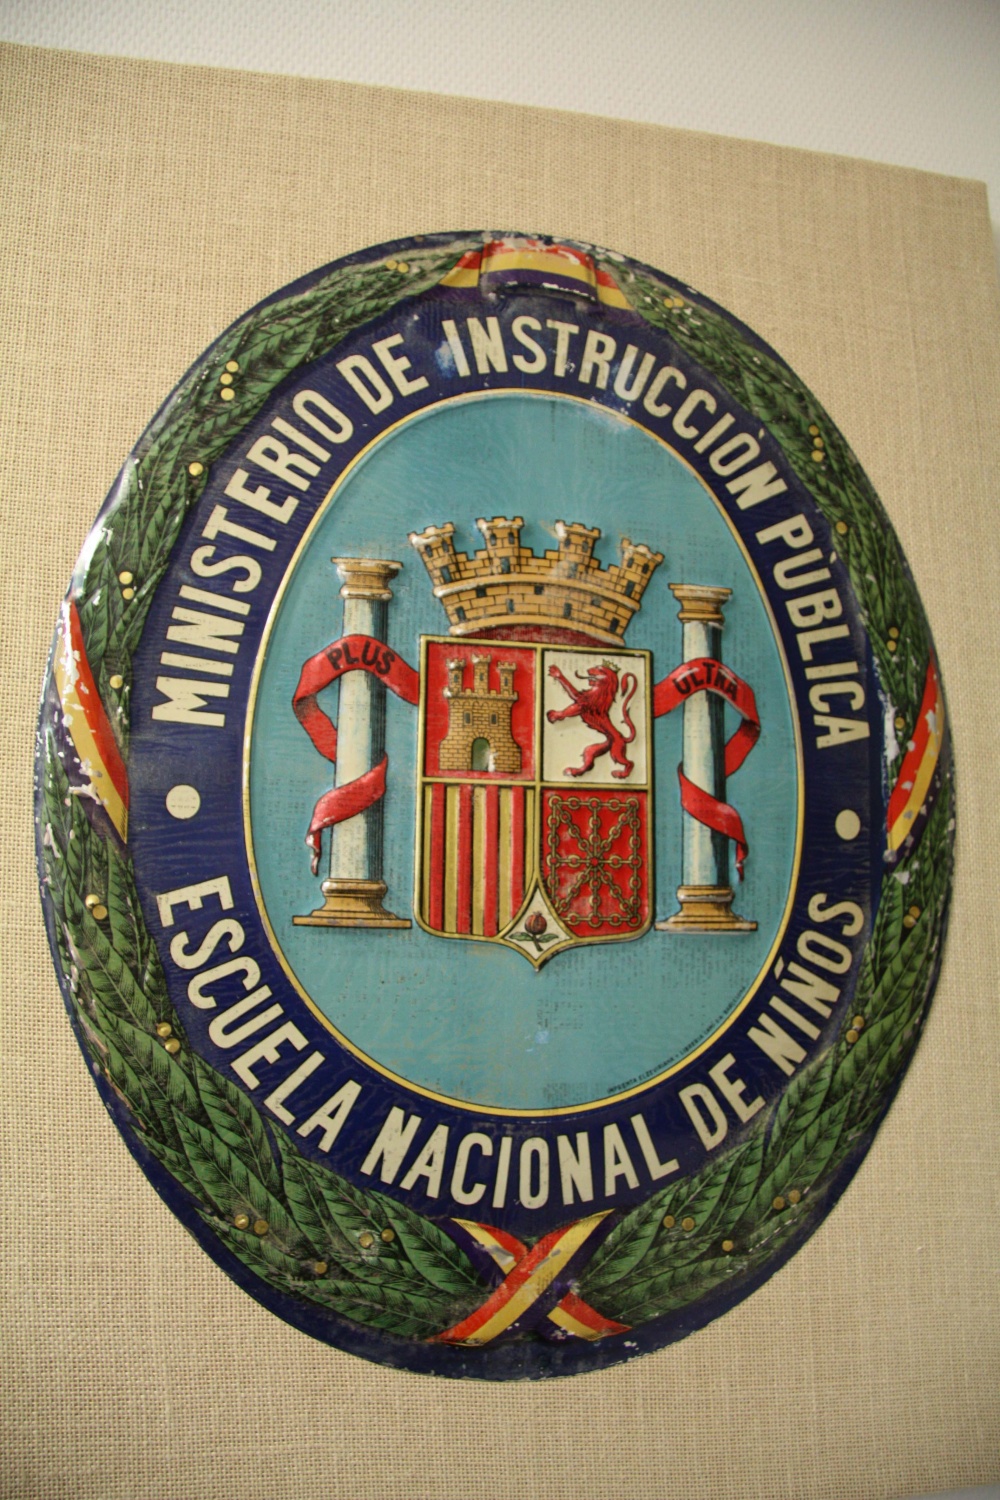 Archivo Municipal Alcalá – Visita diciembre 2016